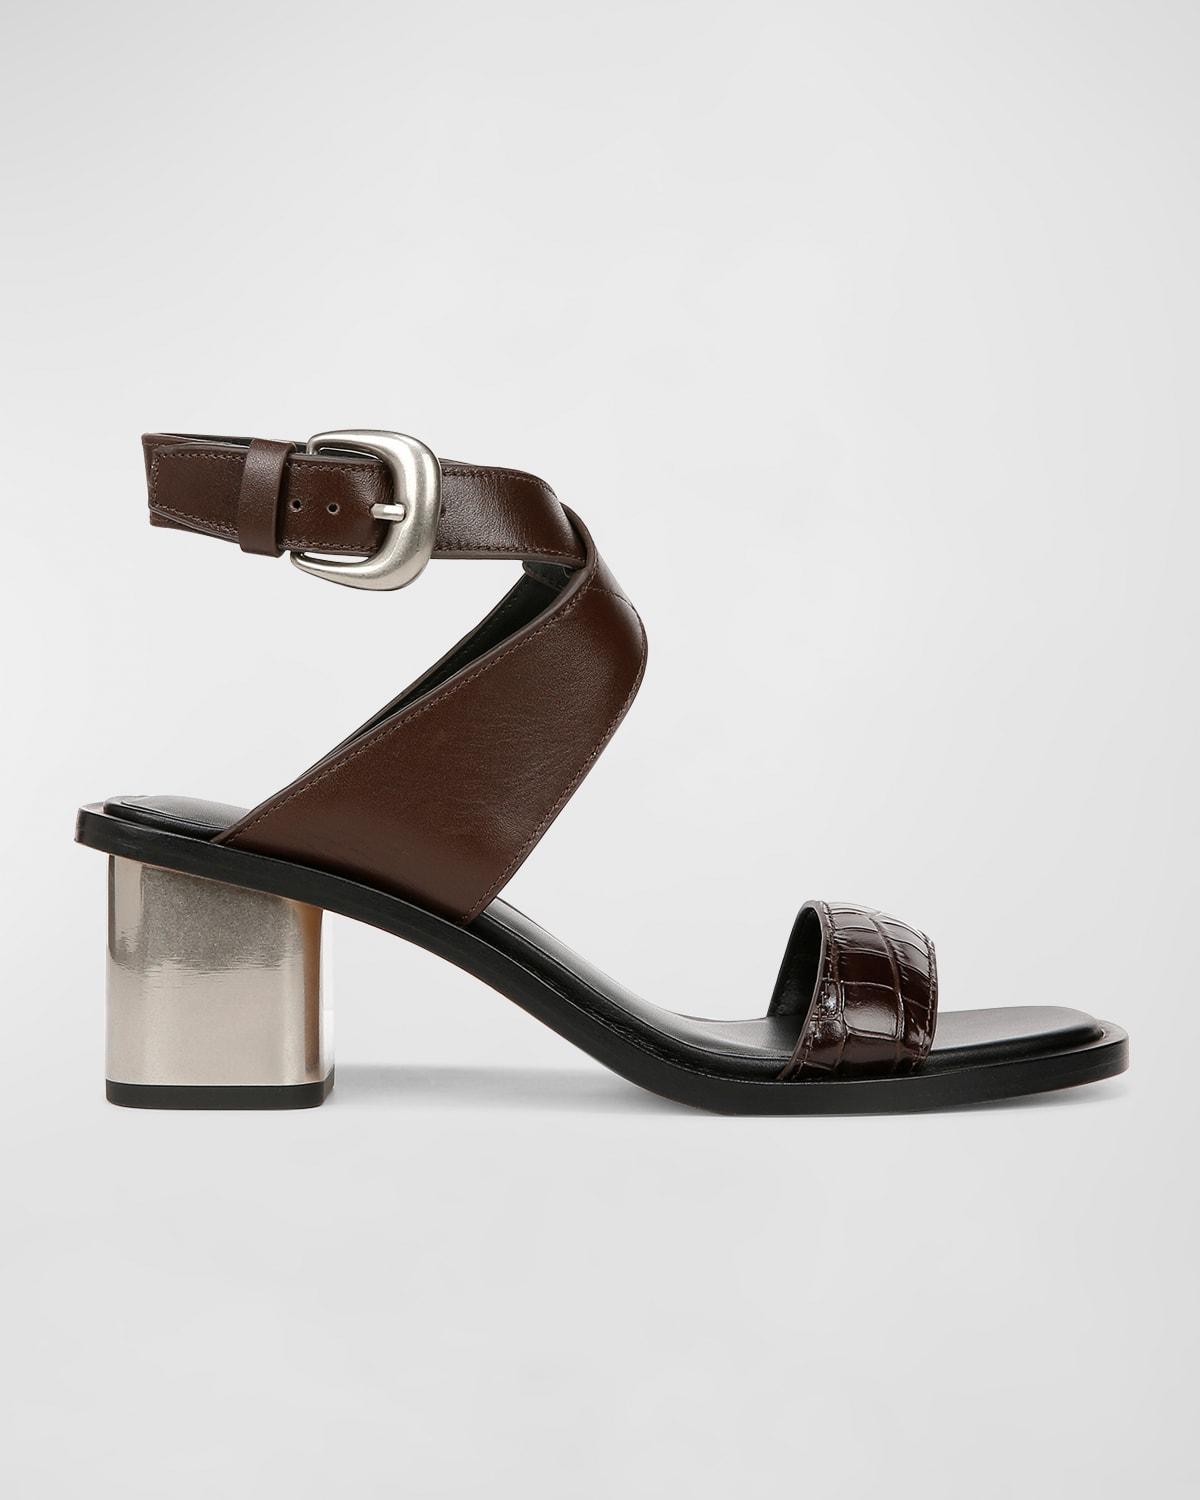 Vince Dalia Block Heel Sandal Product Image